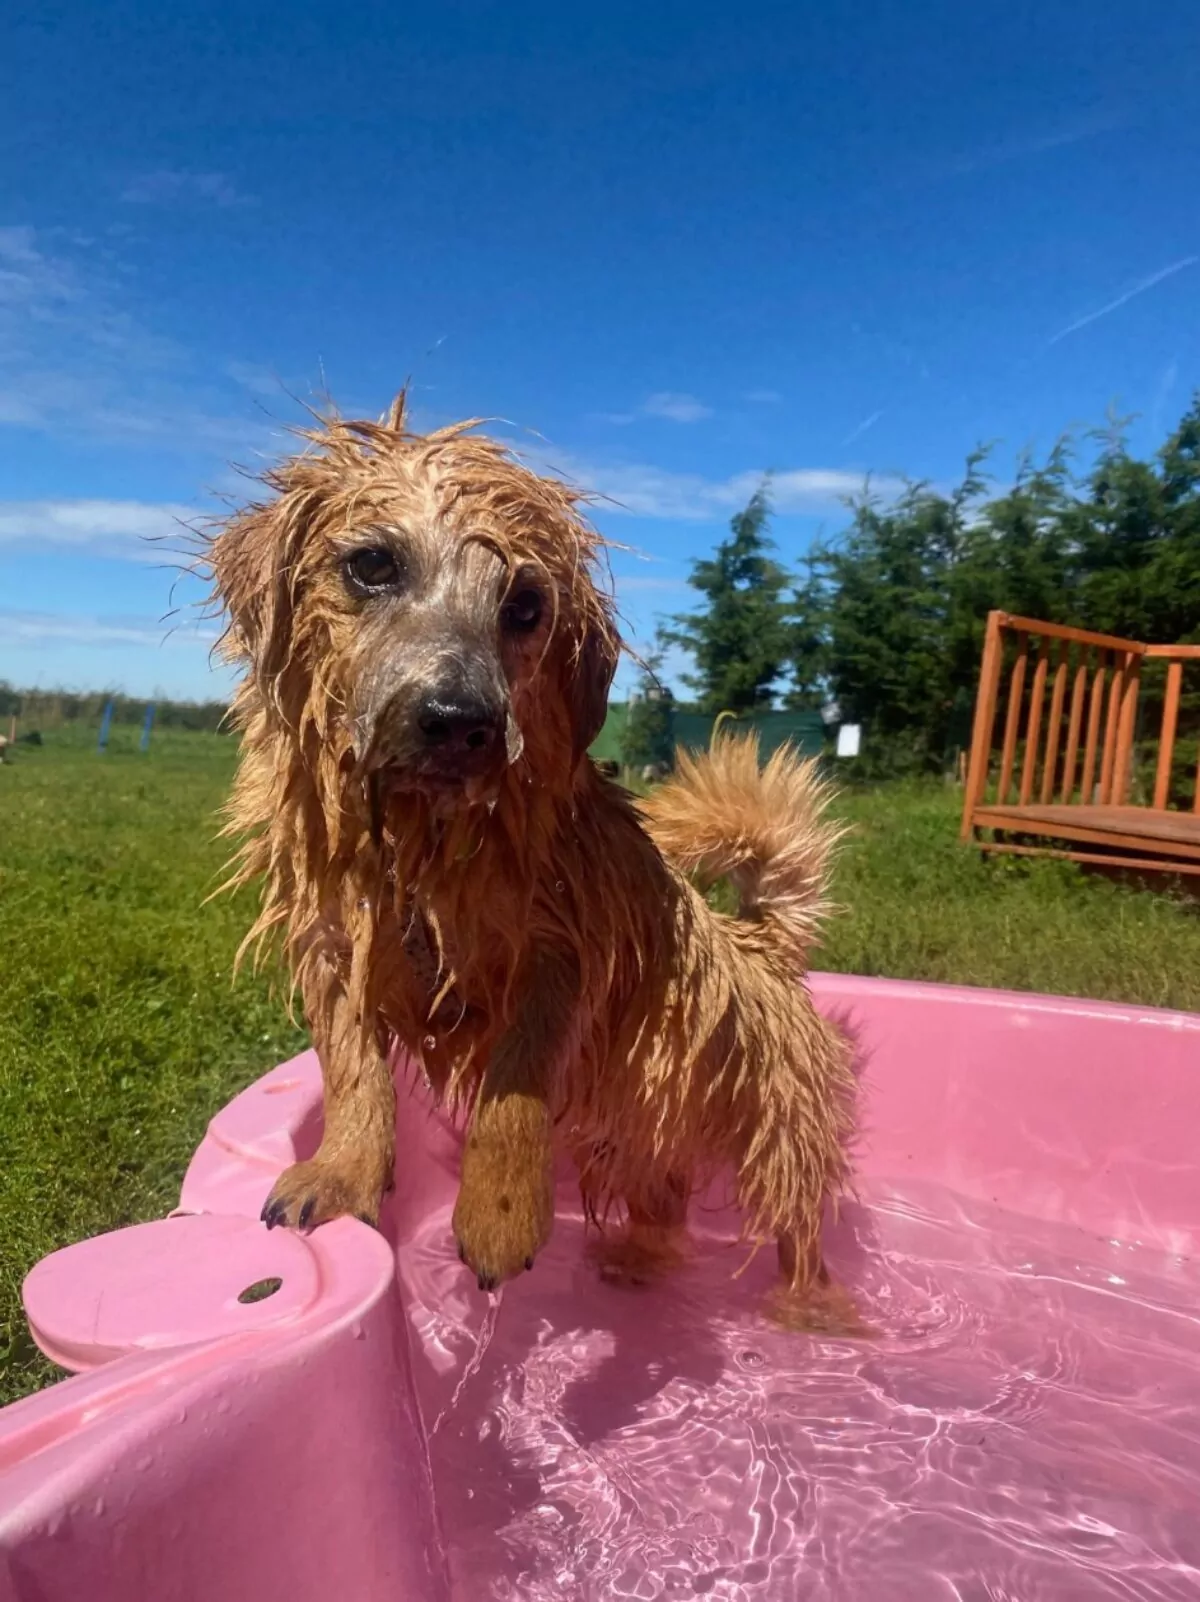 A wet dog, enjoying fun in the paddling pool